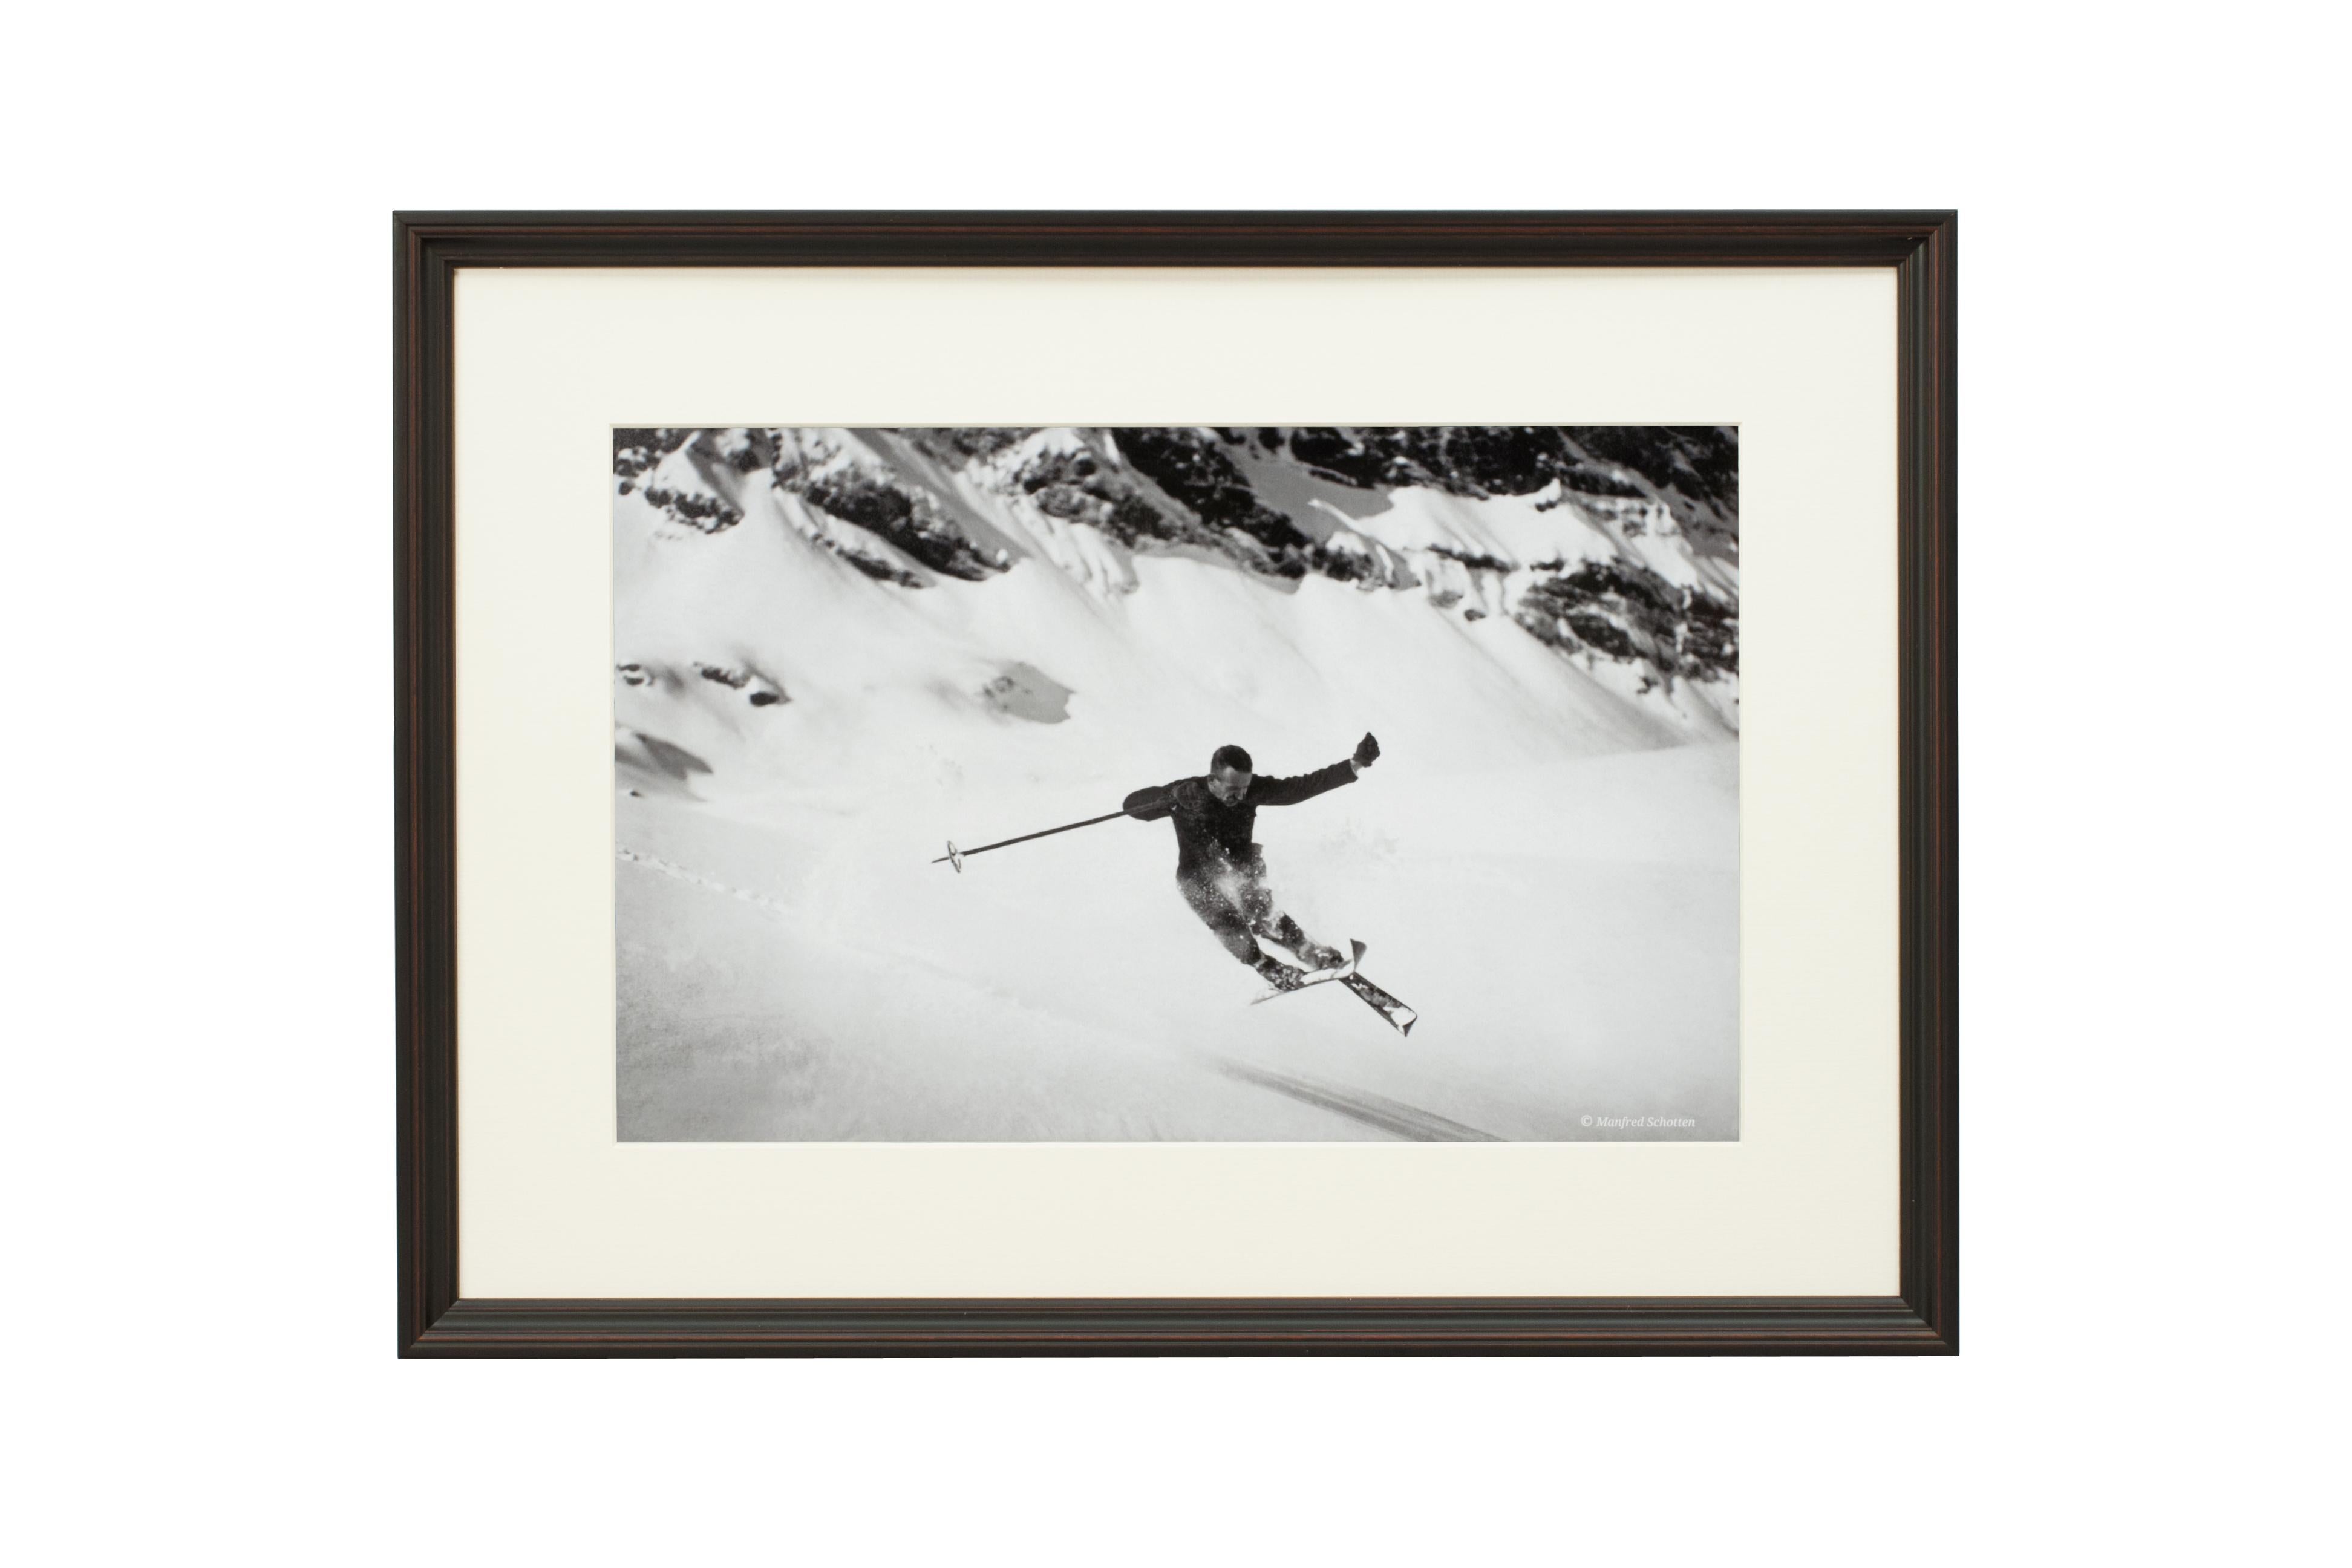 Paper Alpine Ski Photograph, 'Quersprung' Taken from Original 1930s Photograph For Sale